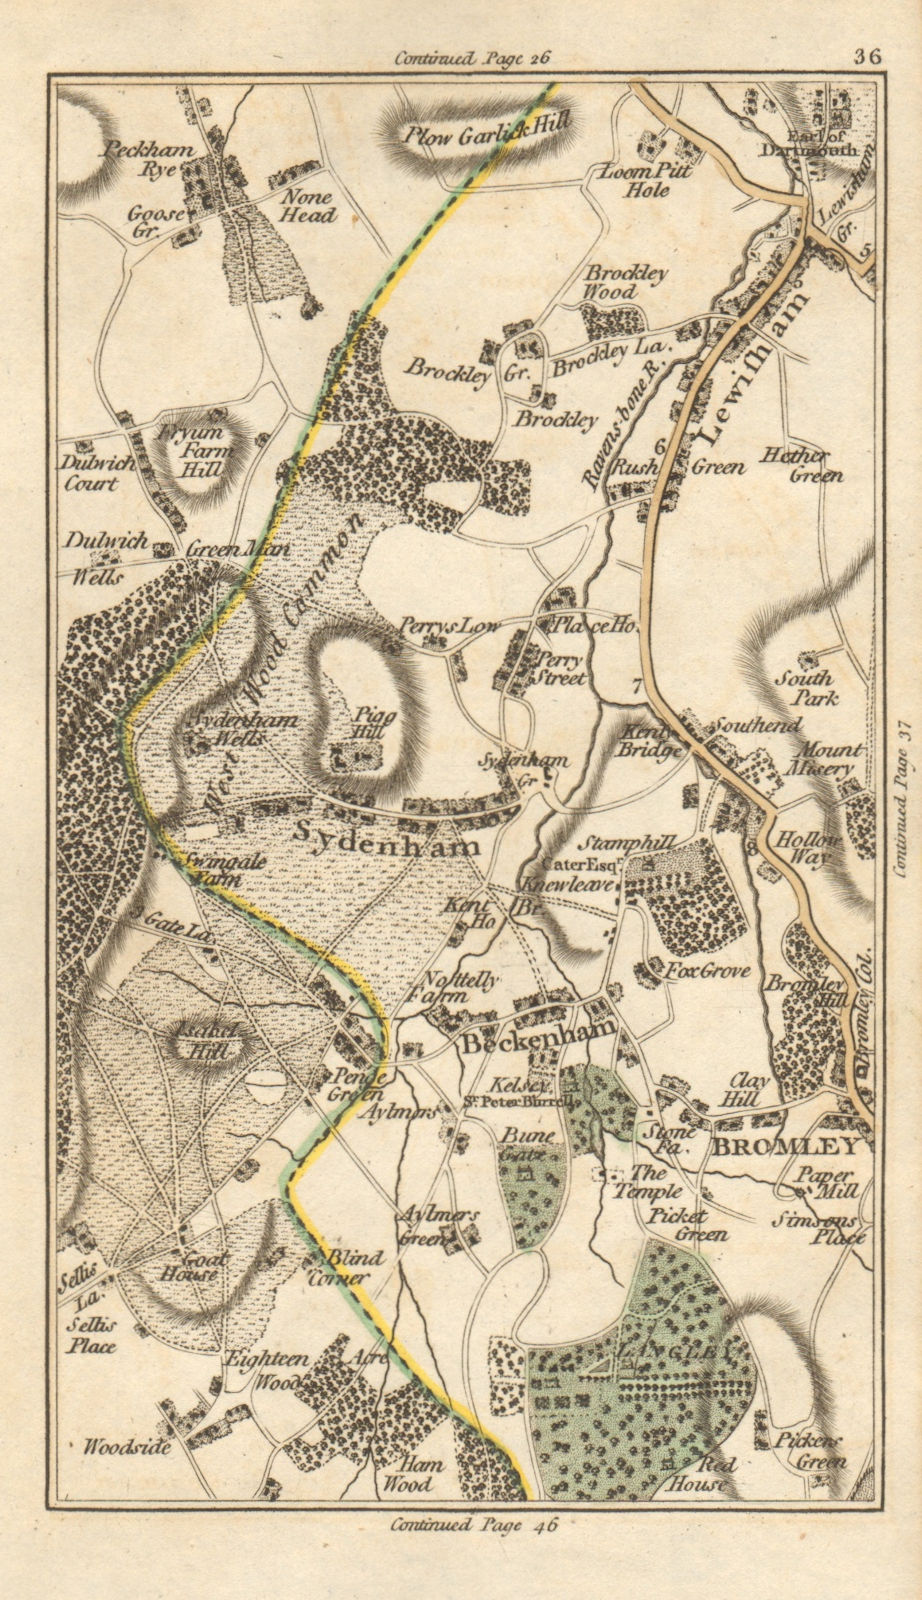 LEWISHAM Sydenham Beckenham Bromley Penge Catford Bellingham Peckham 1786 map